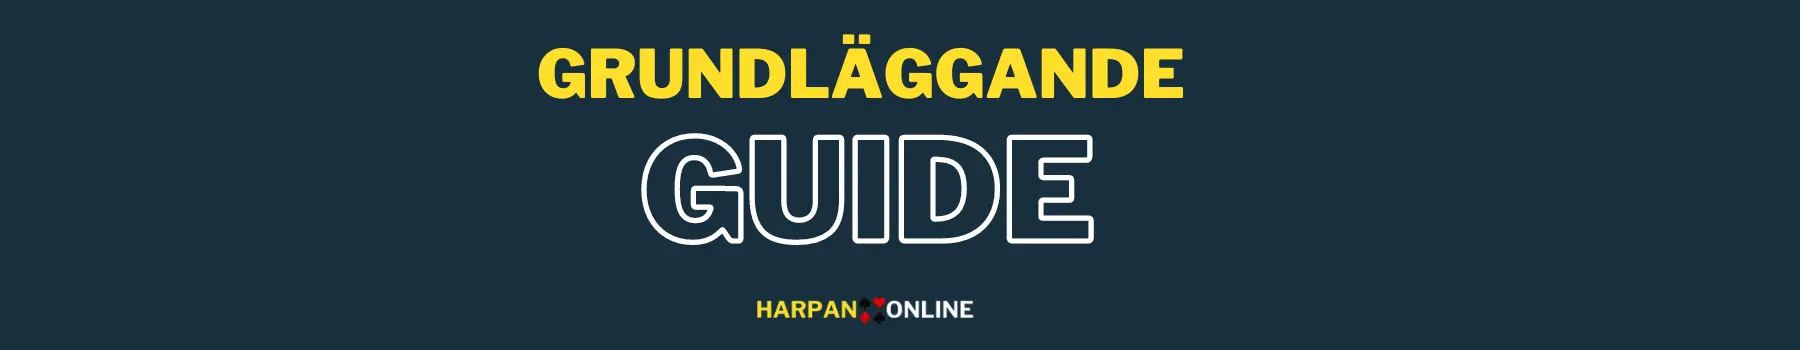  harpan Grundläggande 
 guide